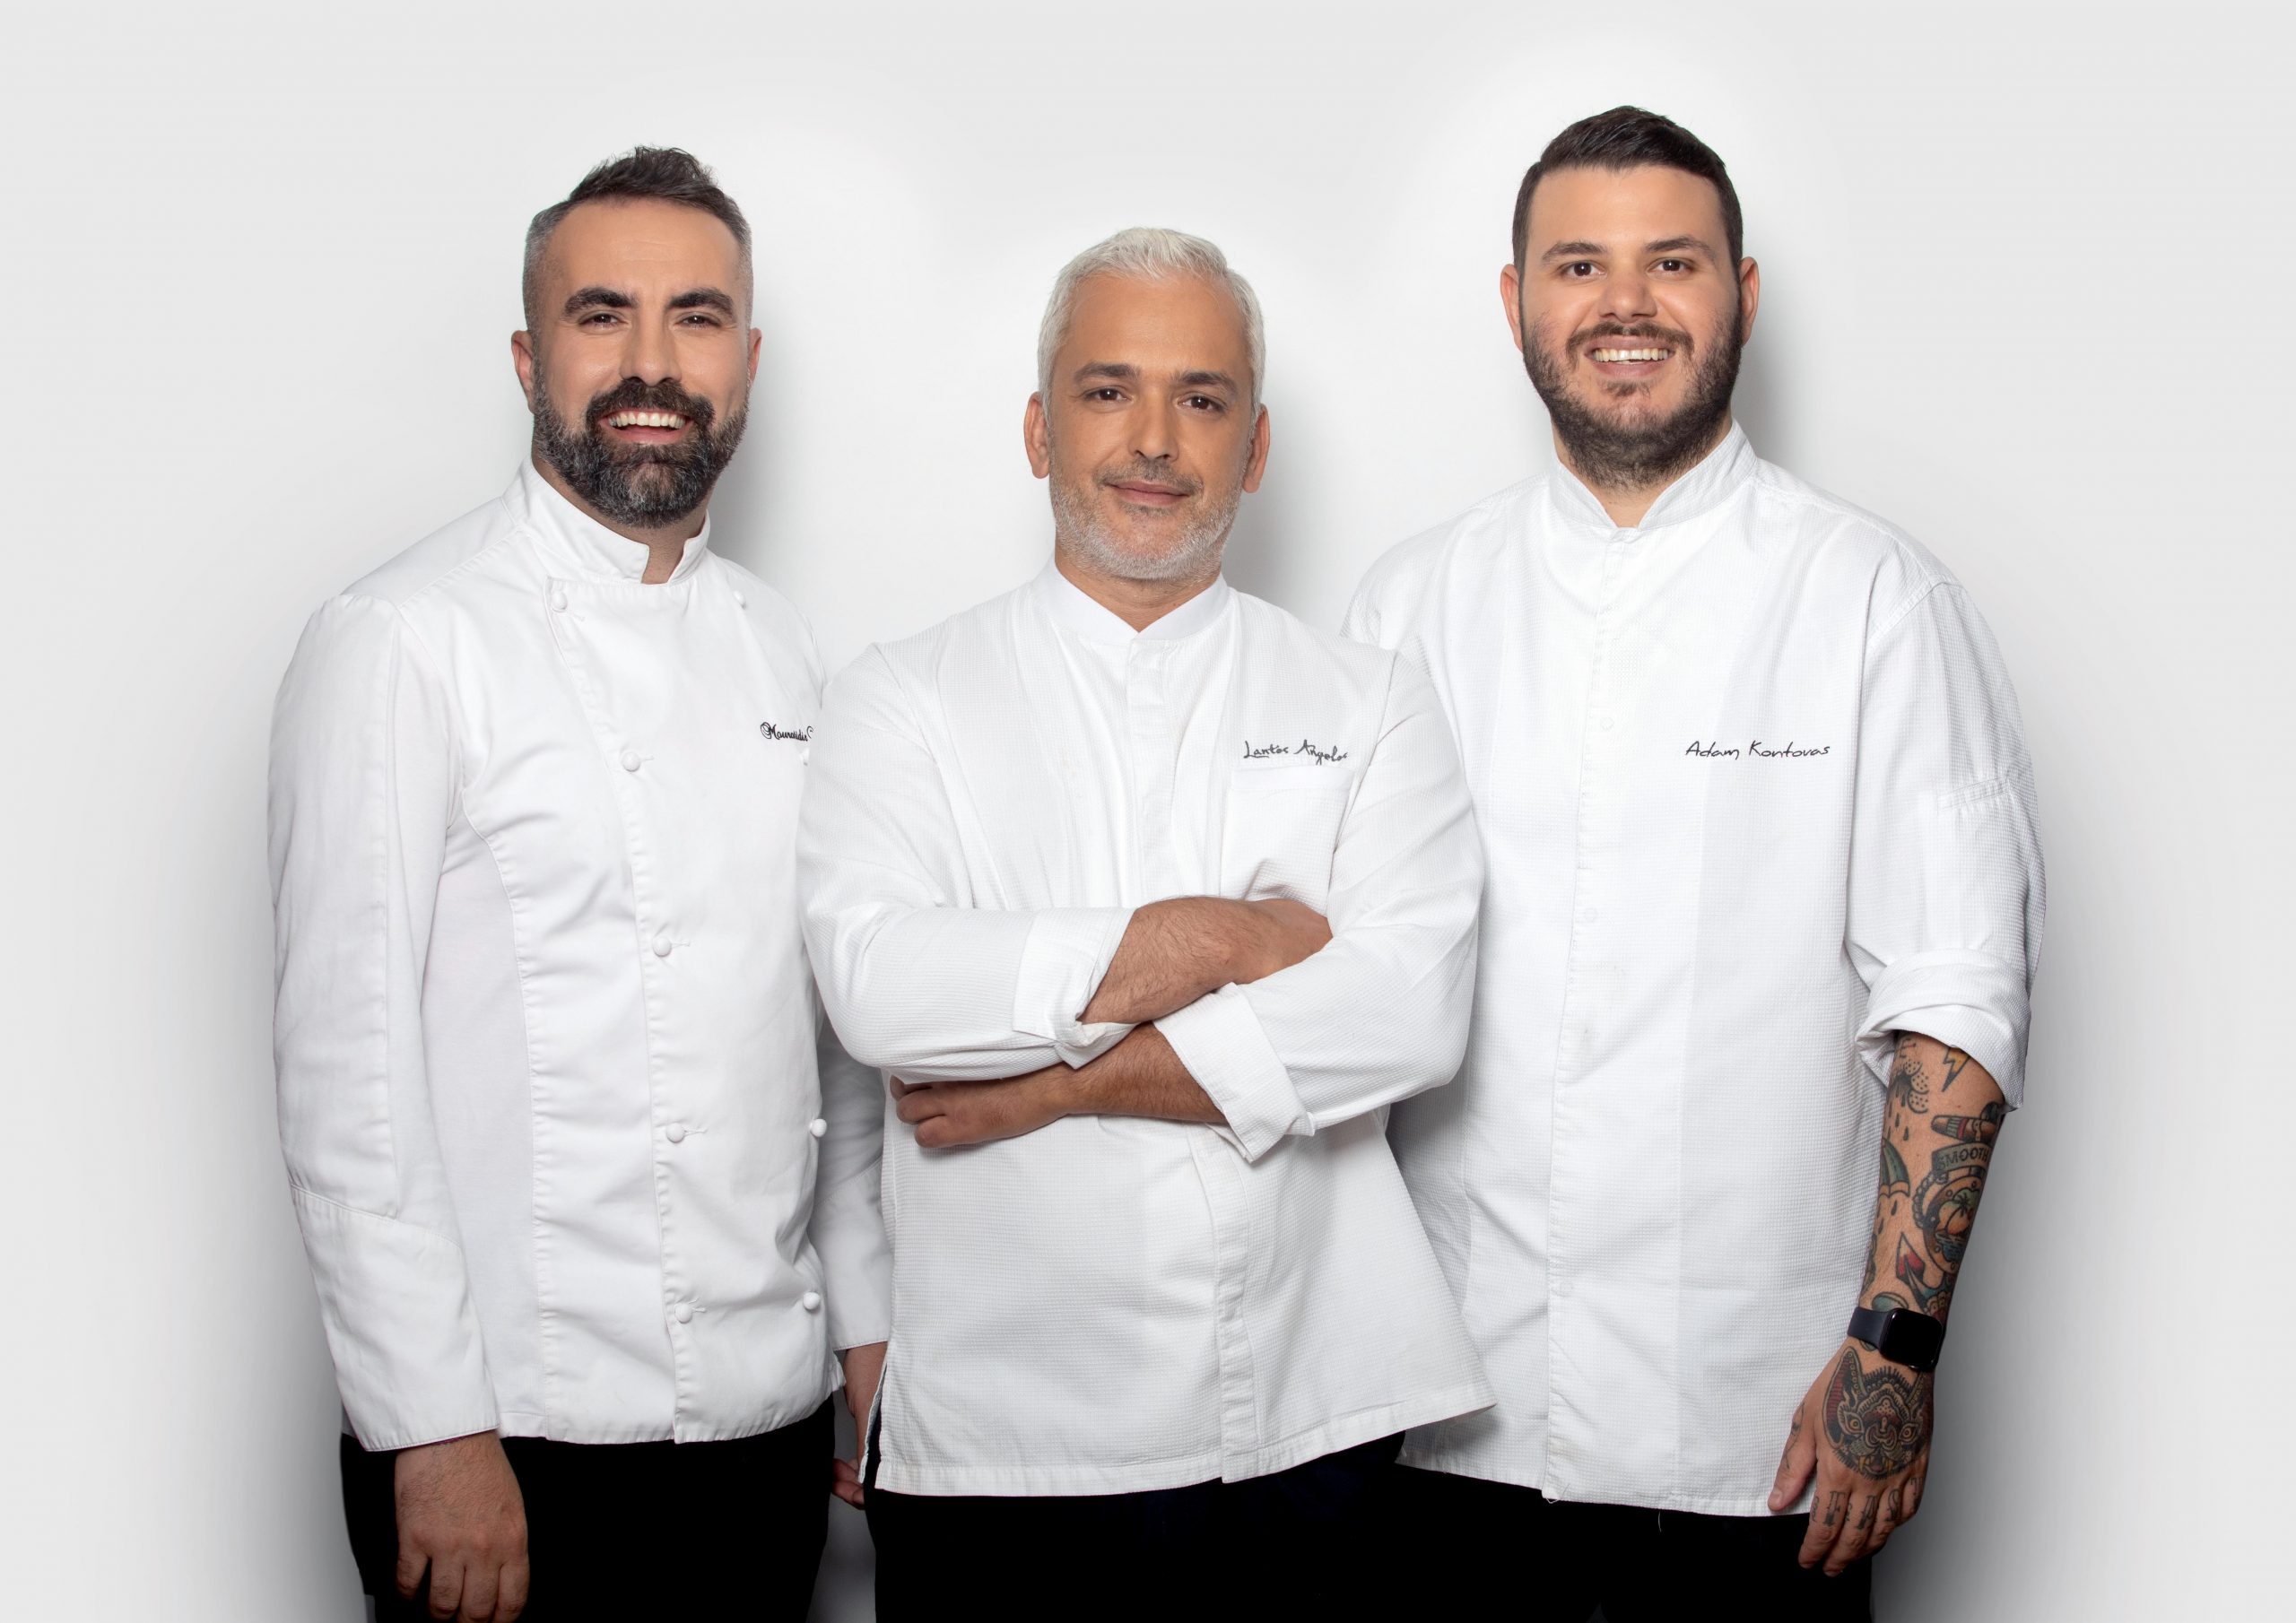 Game of Chefs | Αυτοί είναι οι τρεις κριτές του ριάλιτι μαγειρικής του ΑΝΤ1